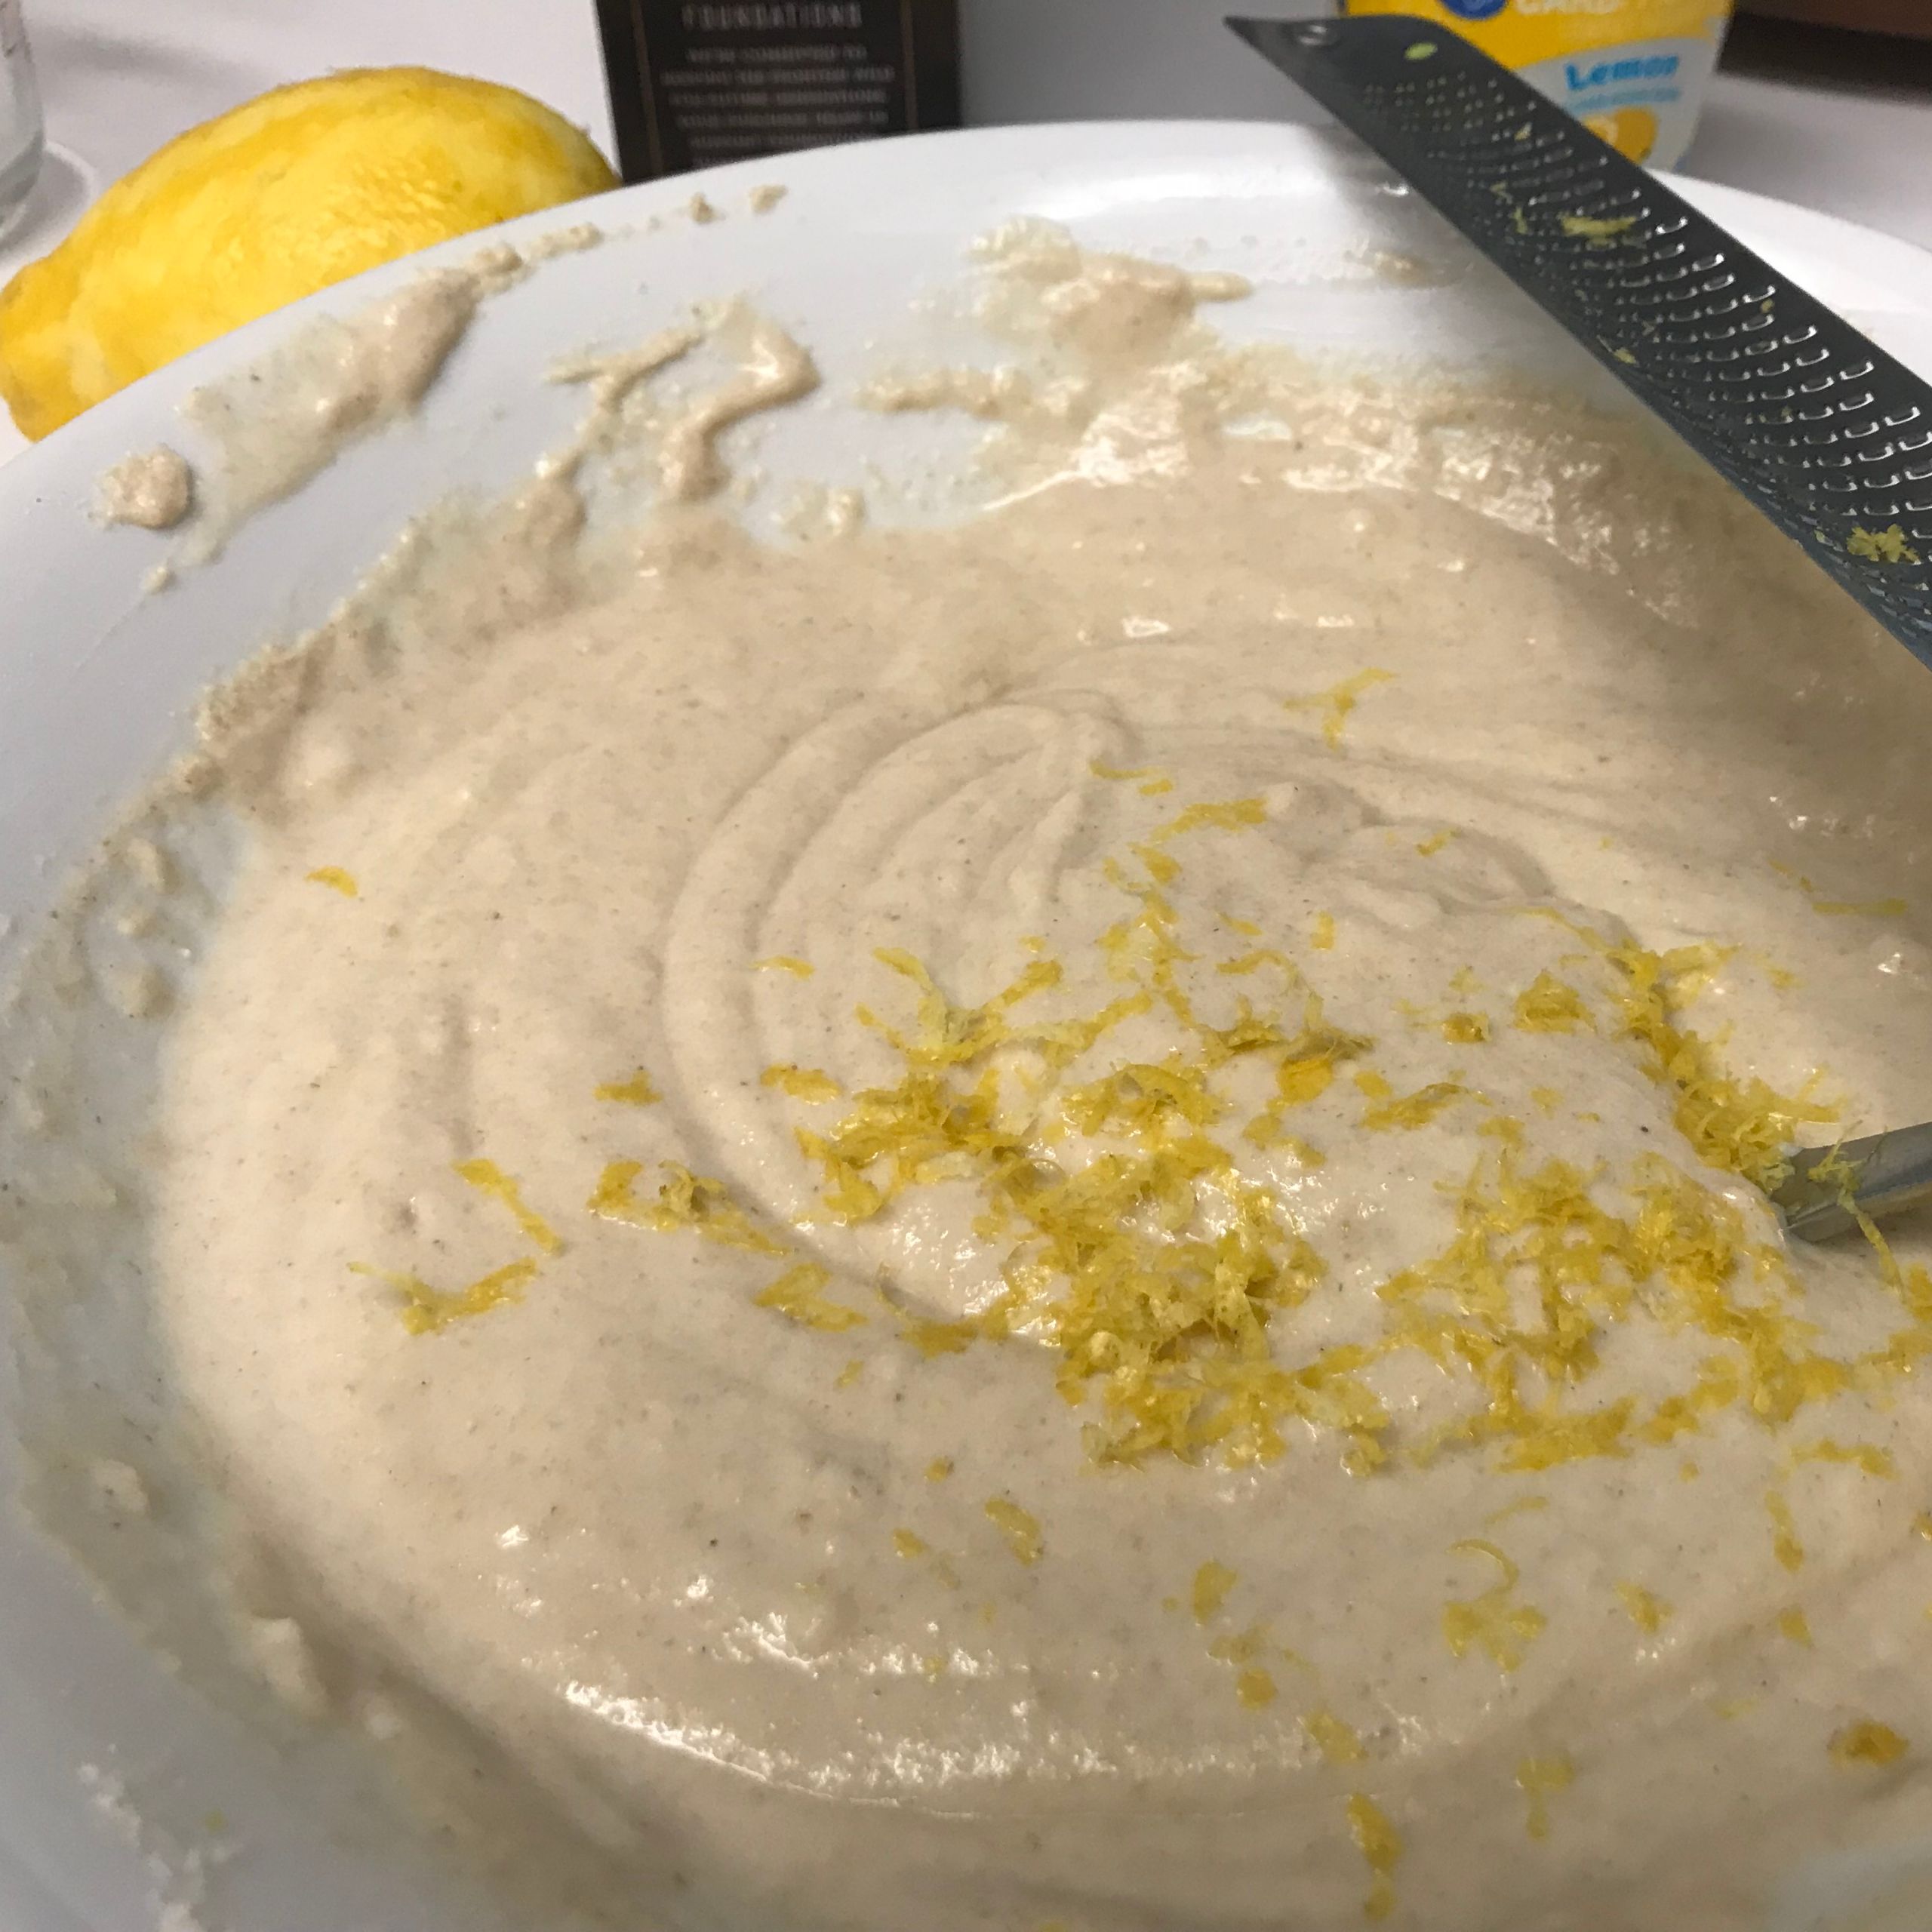 kodiak cake mix and lemon zest batter